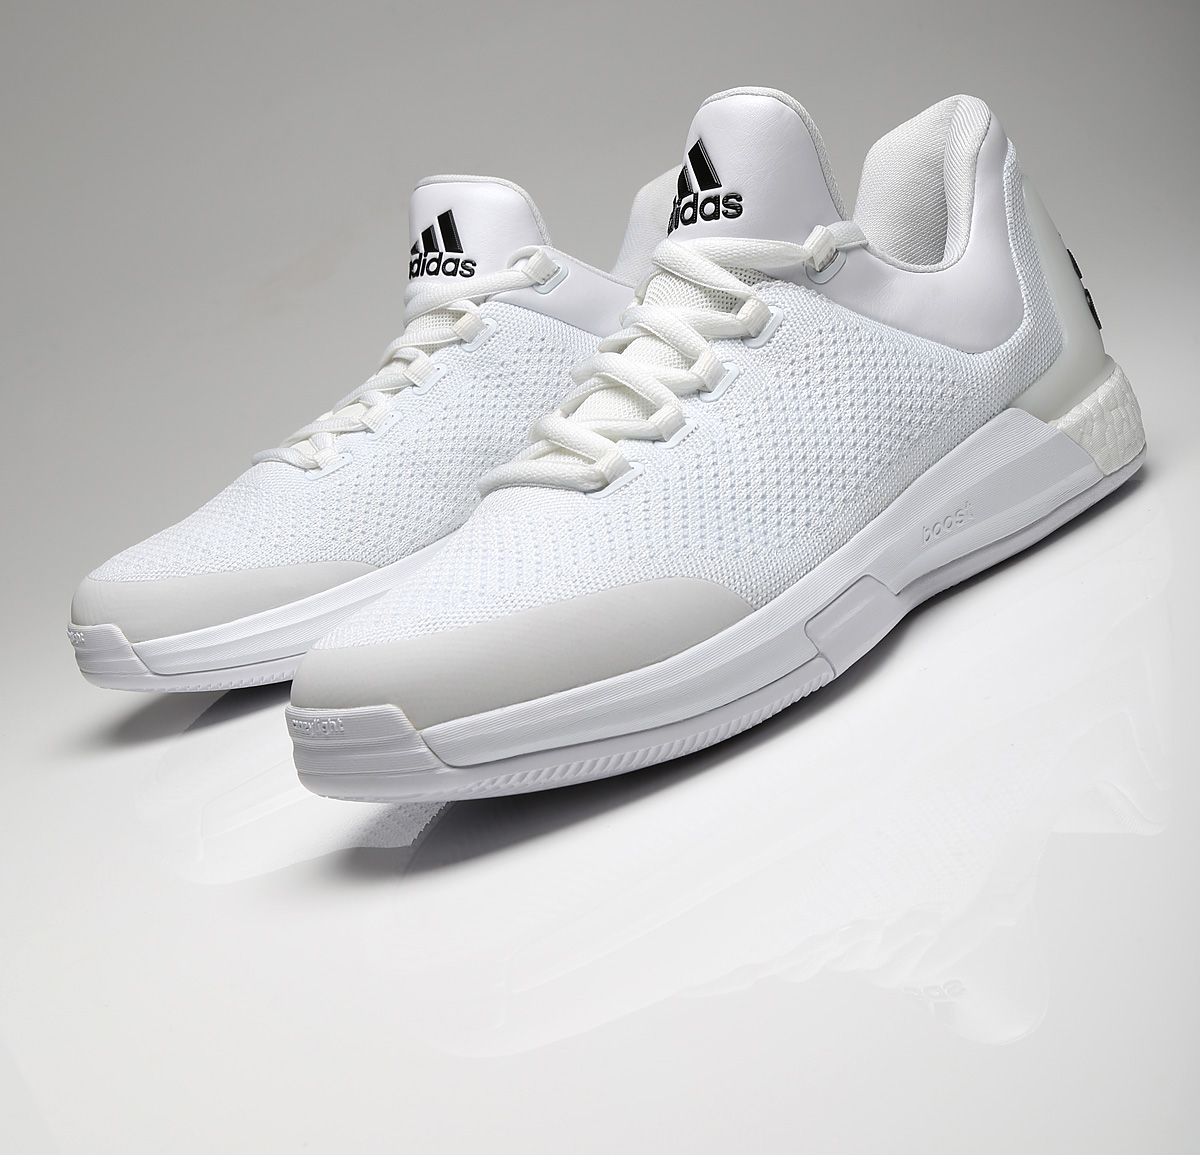 adidas-Crazy-Light-Boost-2015-White-pe-hardens-02